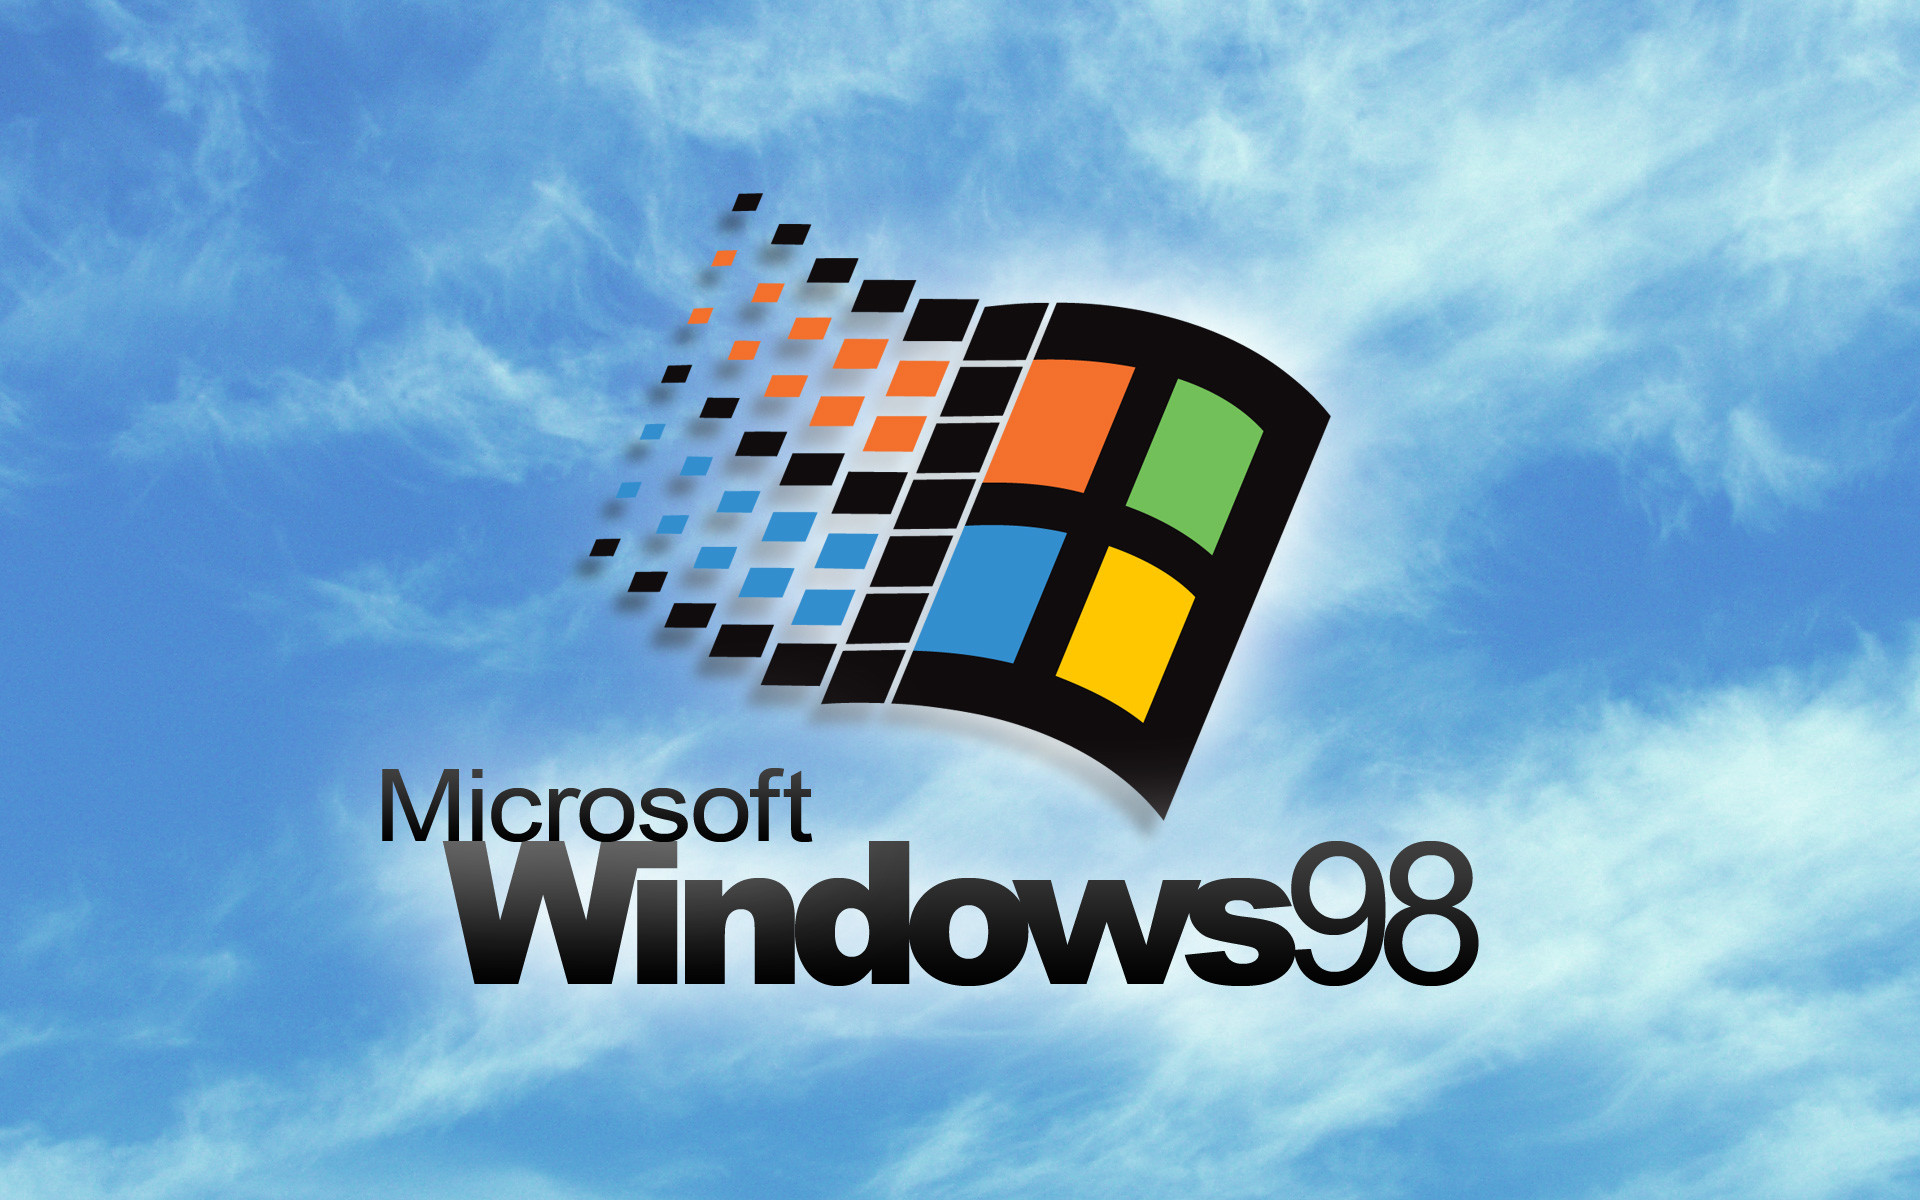 windowns98_logo.jpg